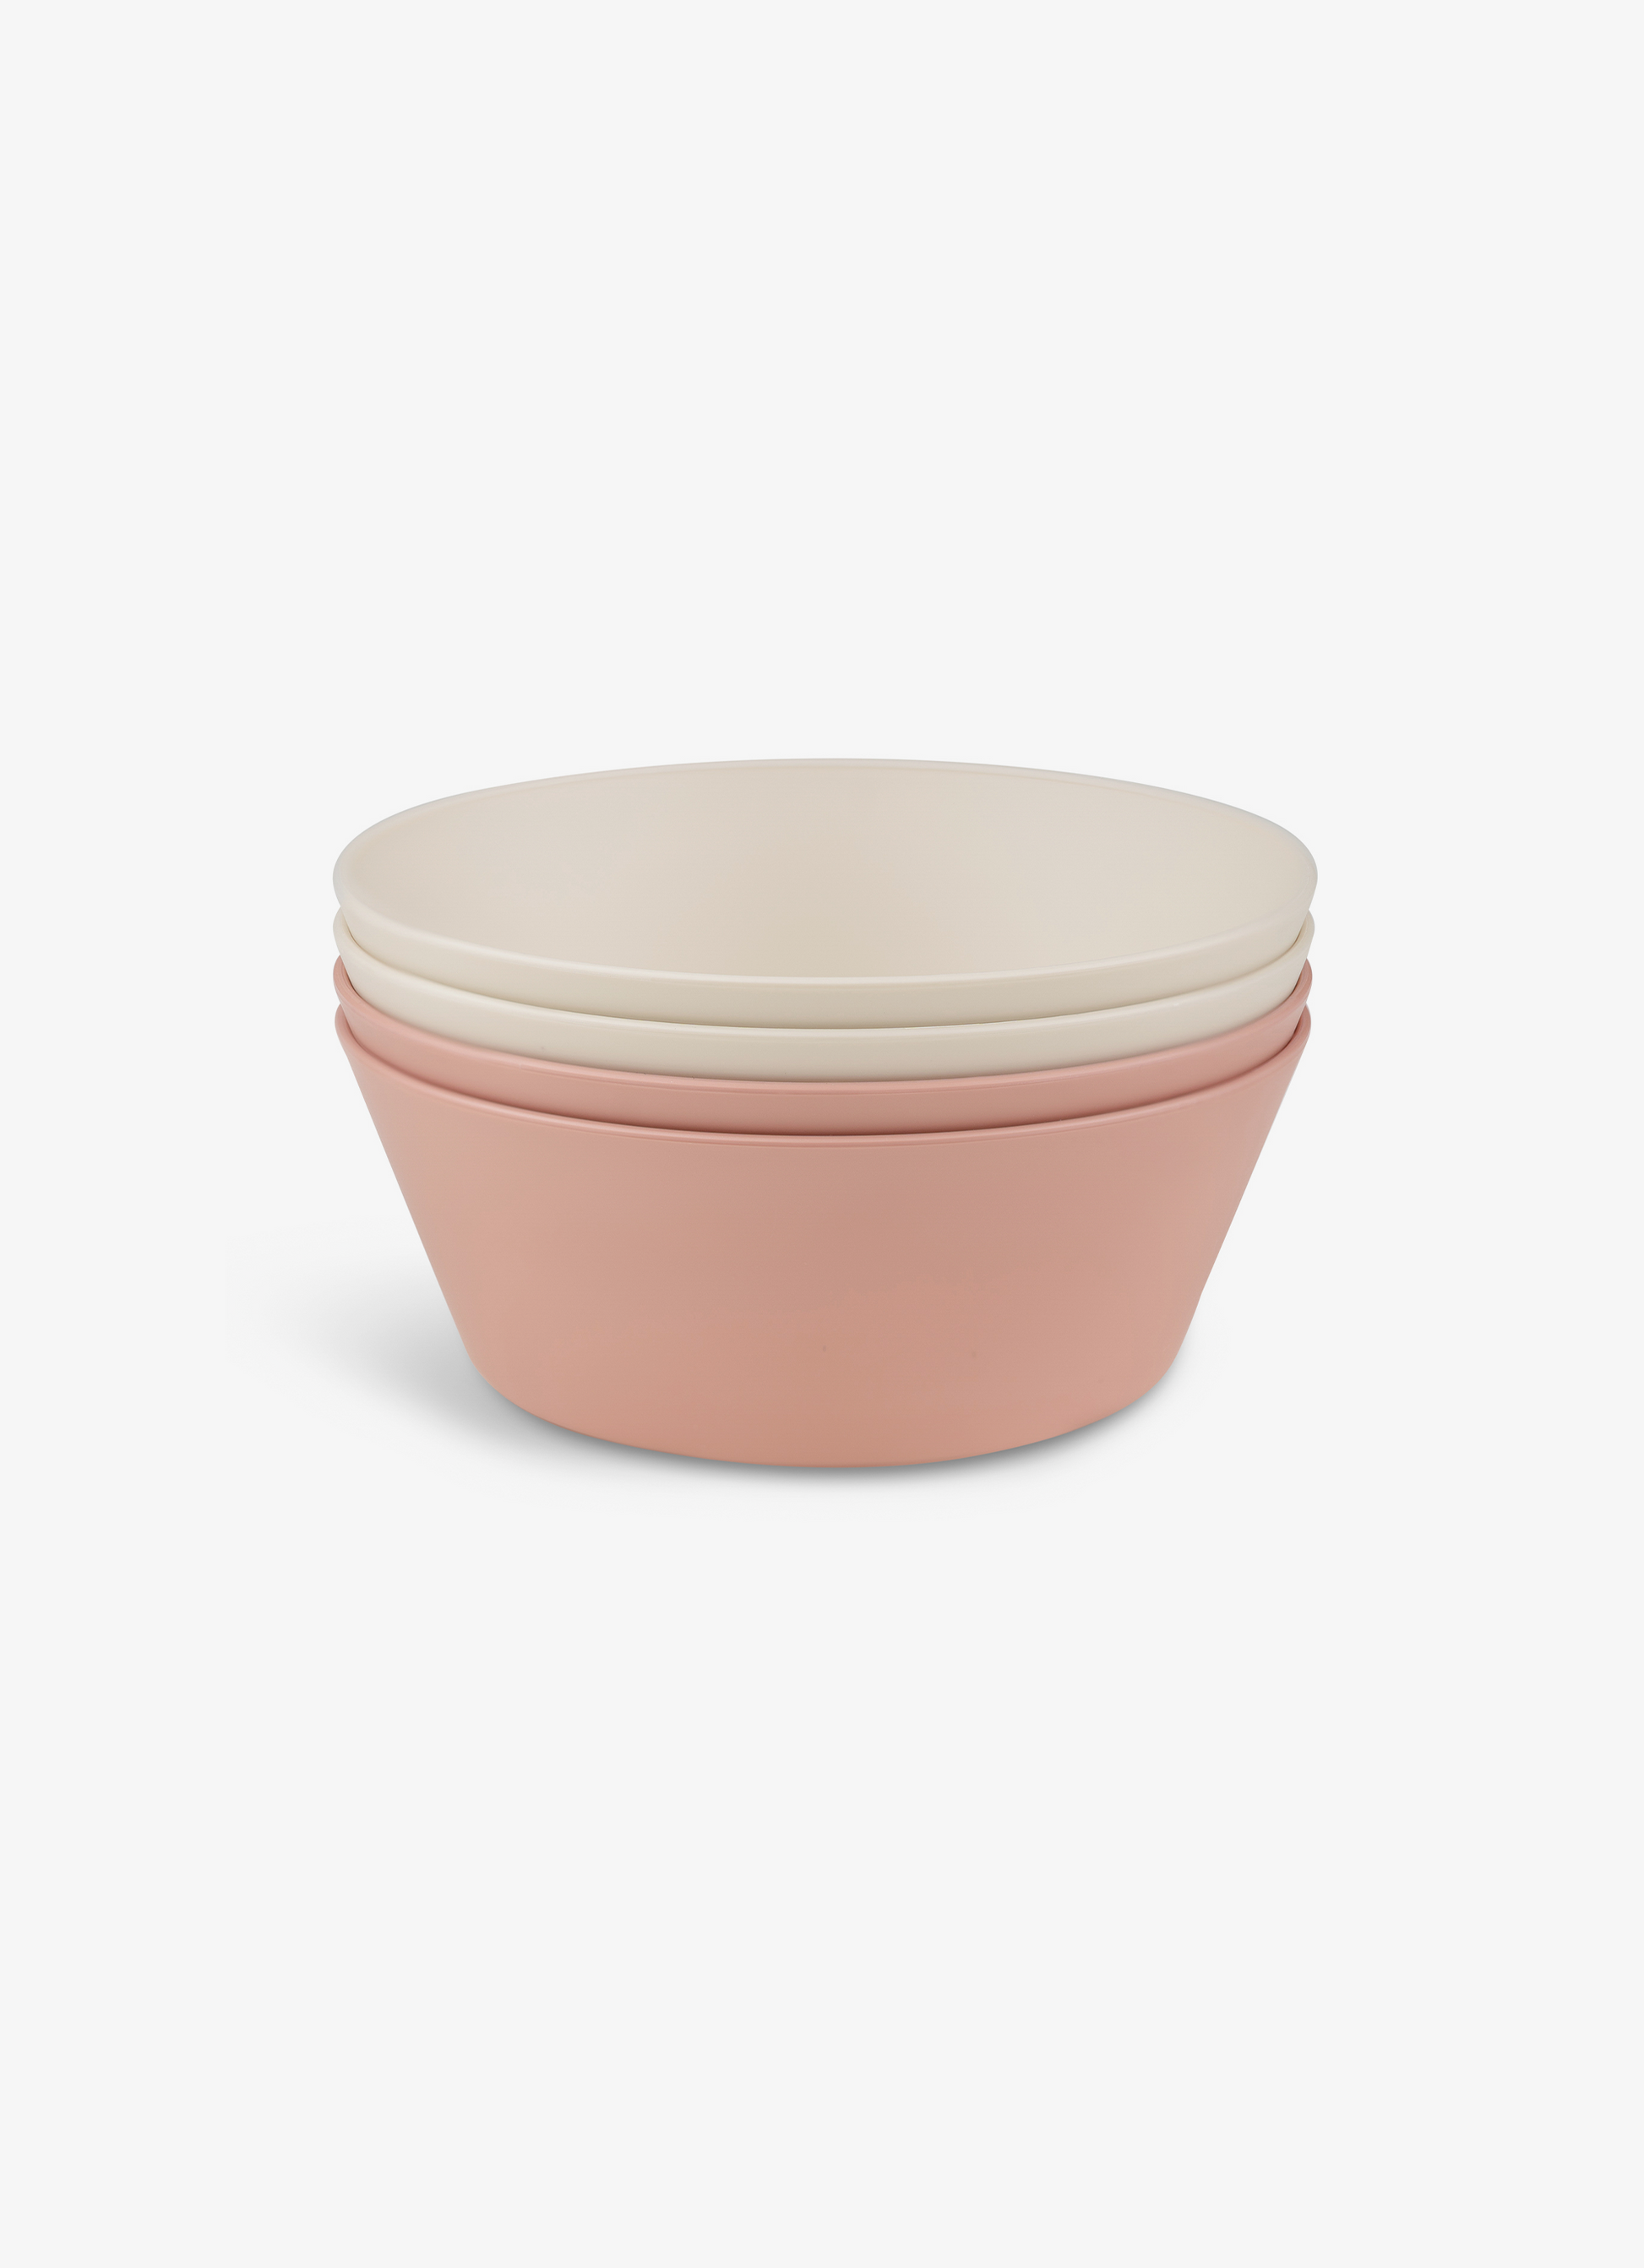 Citron PLA Bowl Set of 4 - Pink/Cream - Laadlee